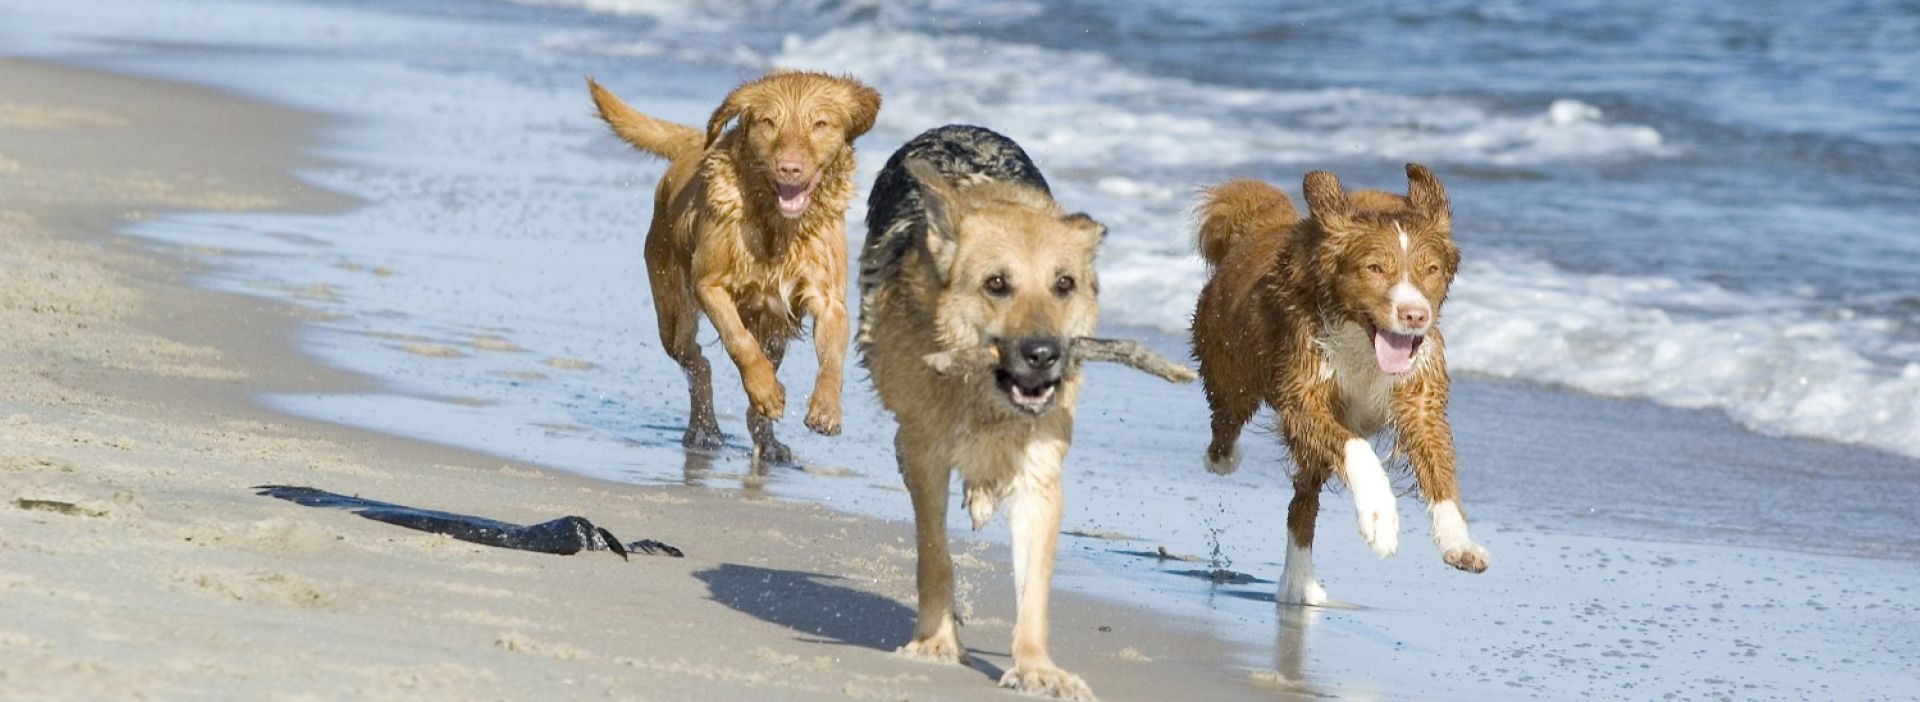 Hunde laufen am Strand im Meer